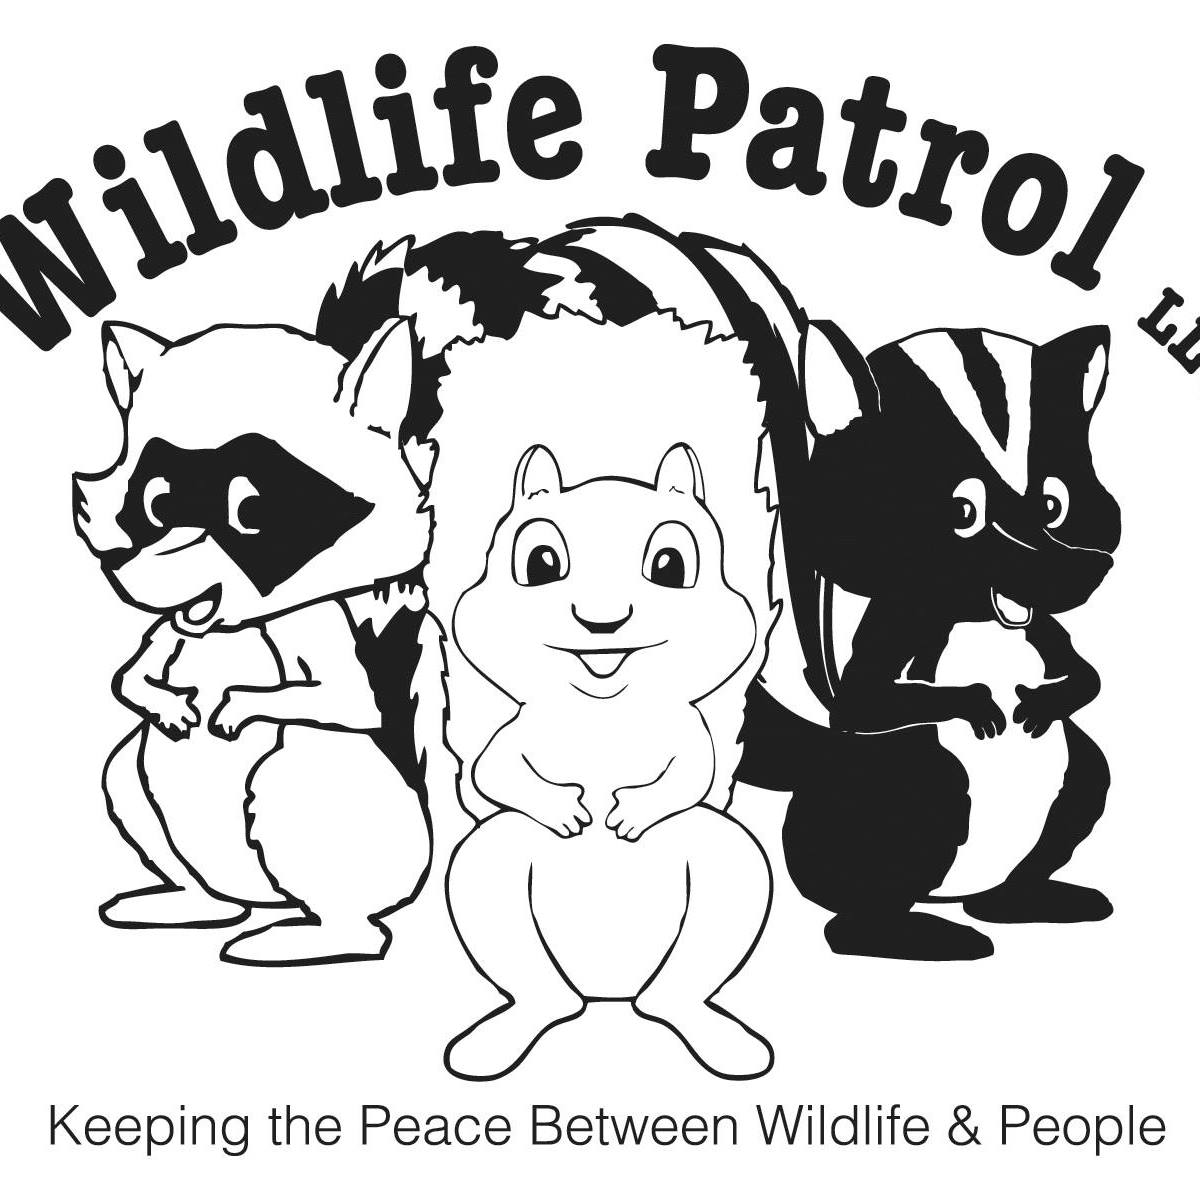 Wildlife Patrol